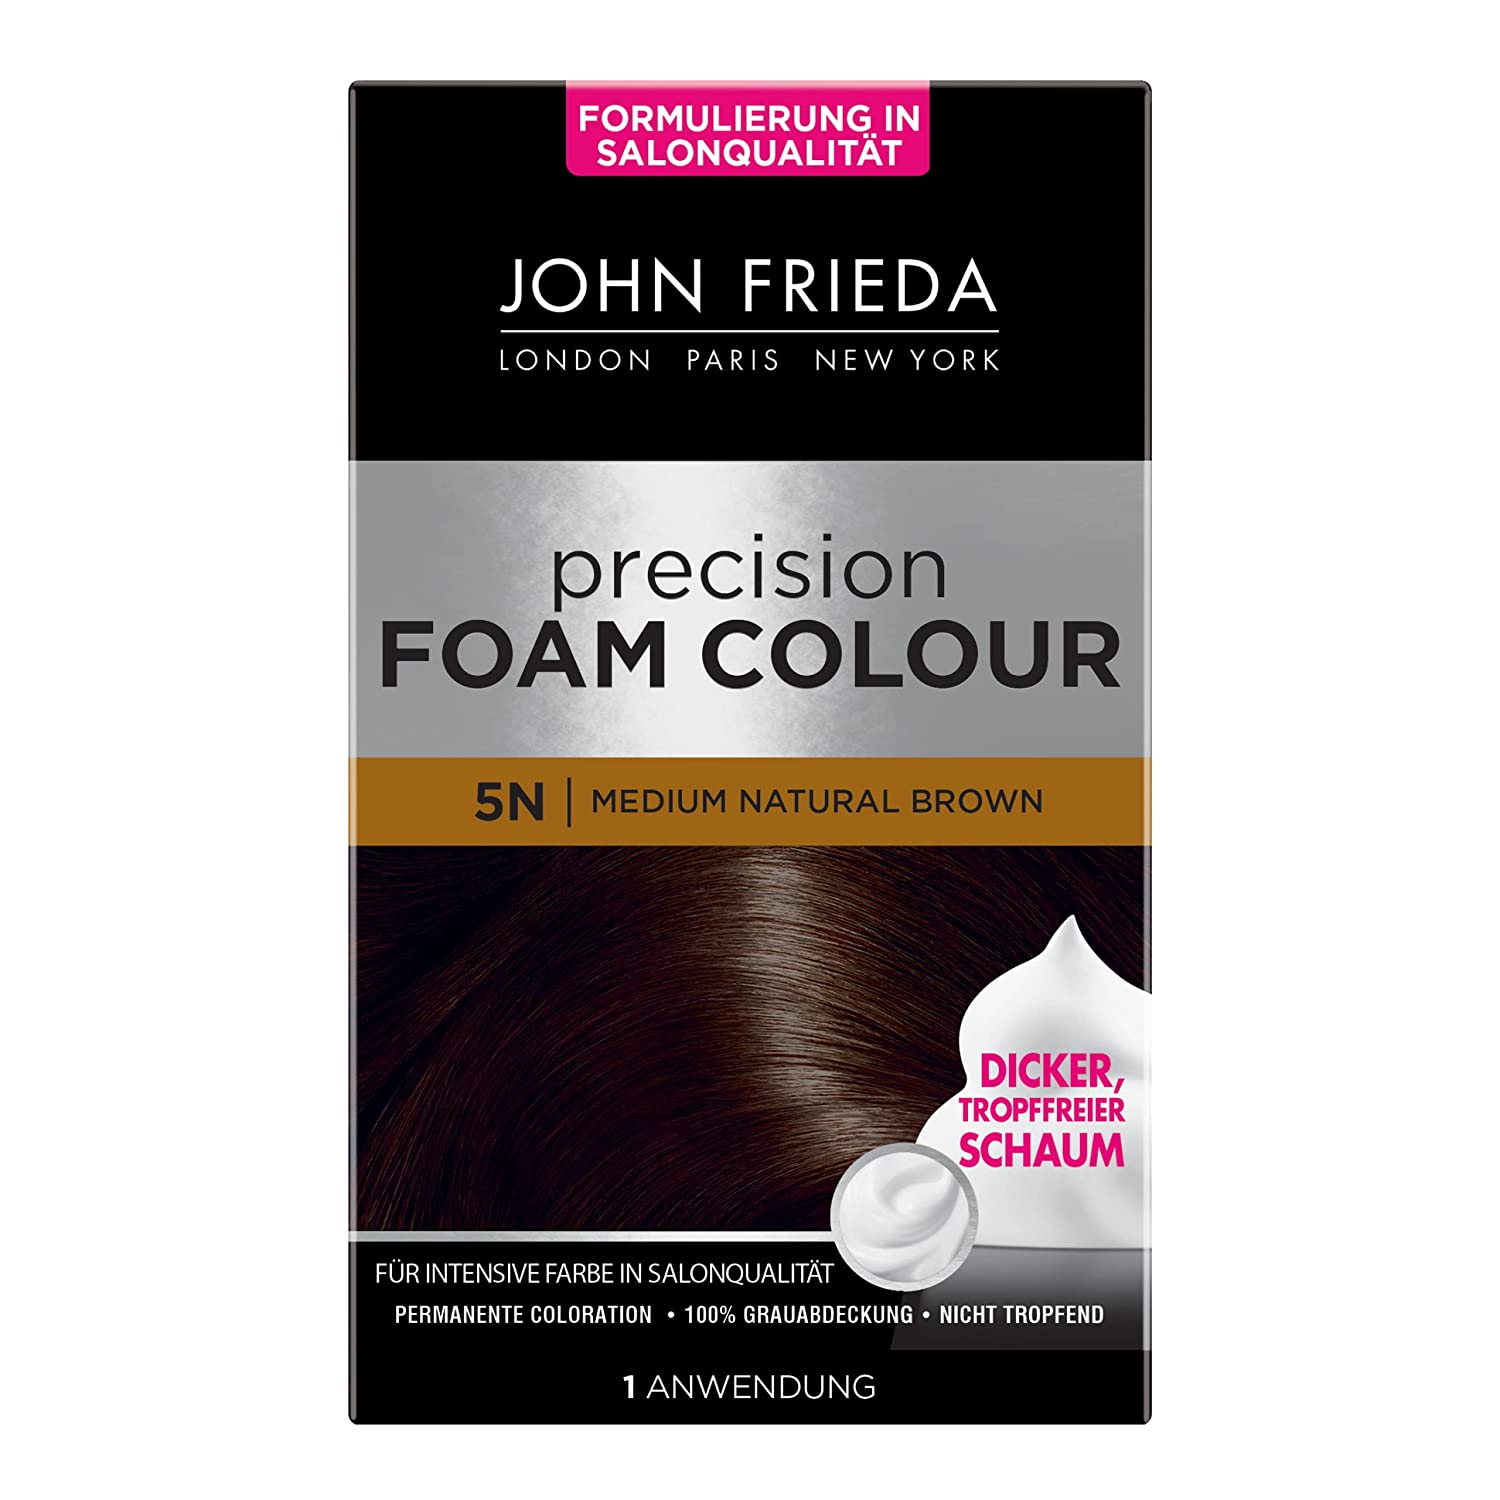 John Frieda Precision Foam Colour - Colour: 5N Medium Natural Brown - Medium Brown - Permanent Foam Colour - Perfect, Even Coverage - Single Application, ‎brown